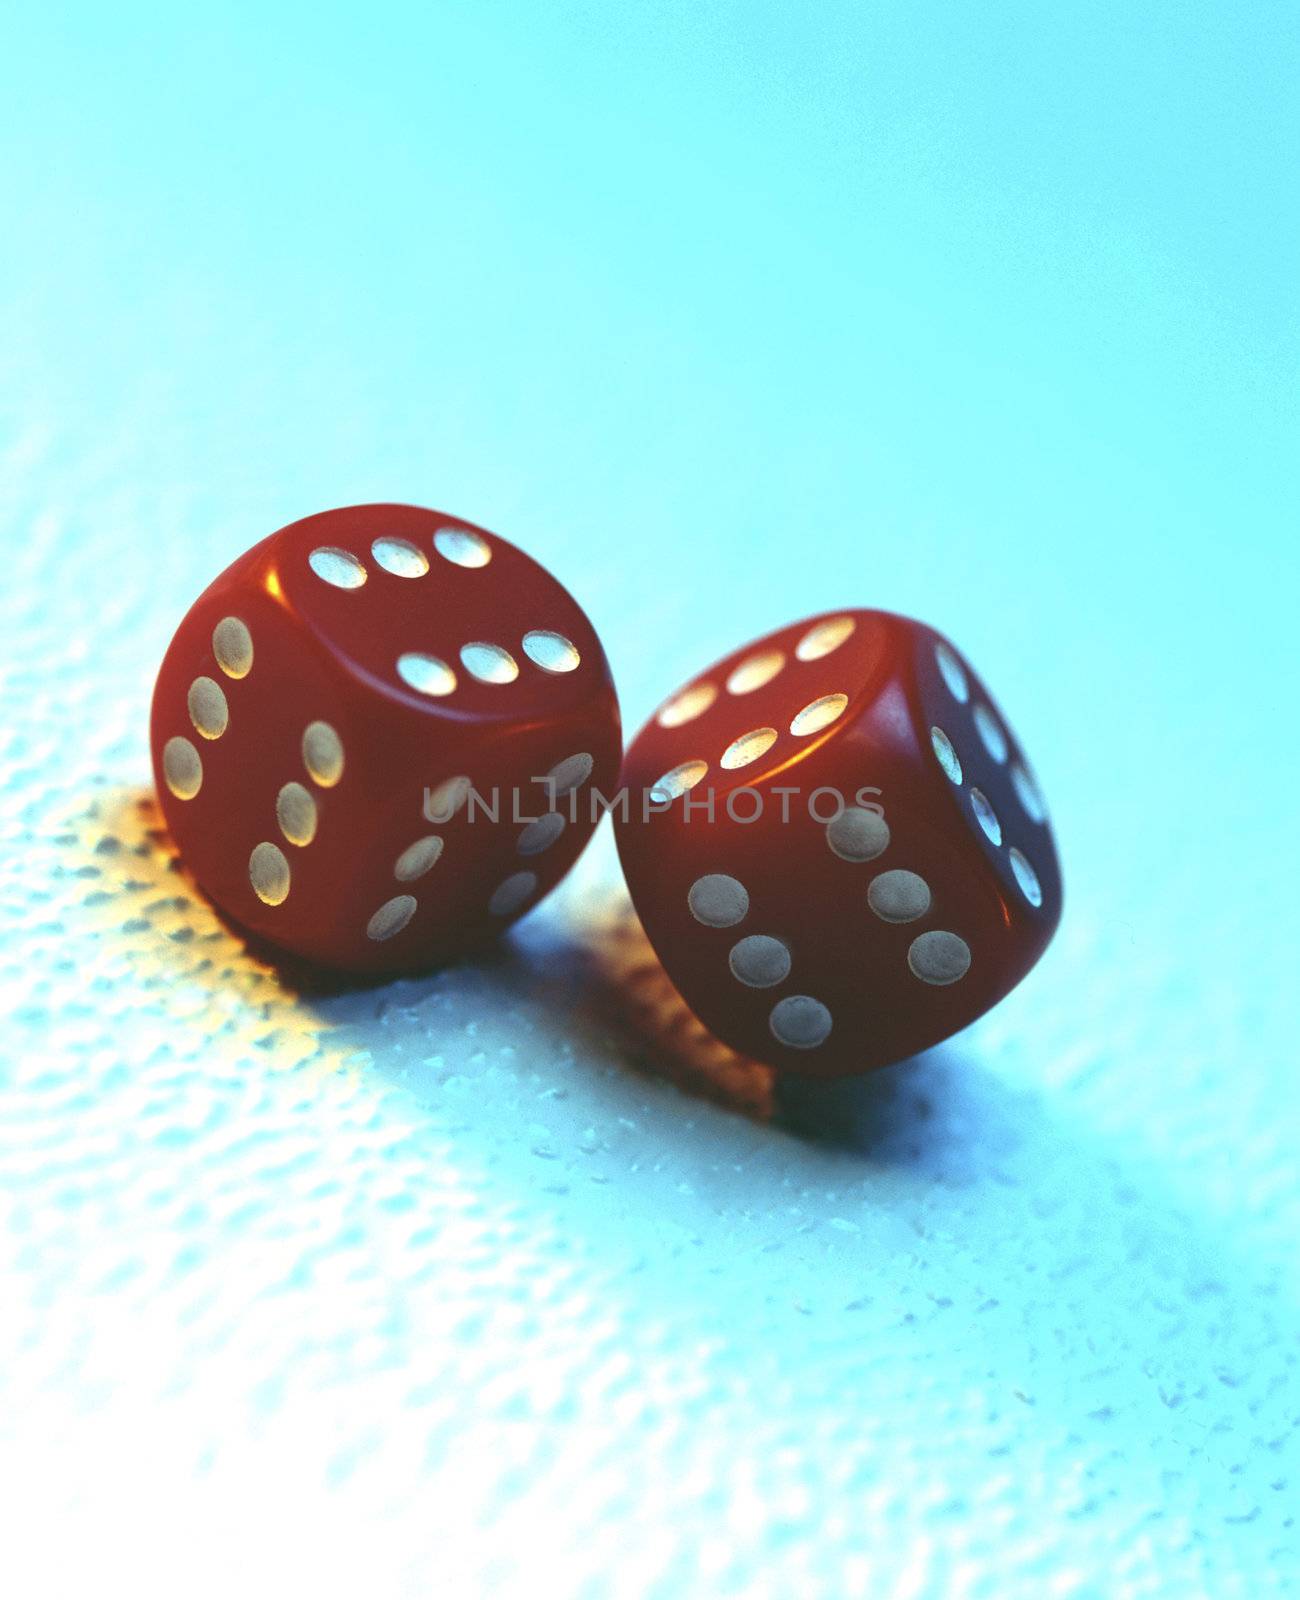 rolling the dice by photo_guru